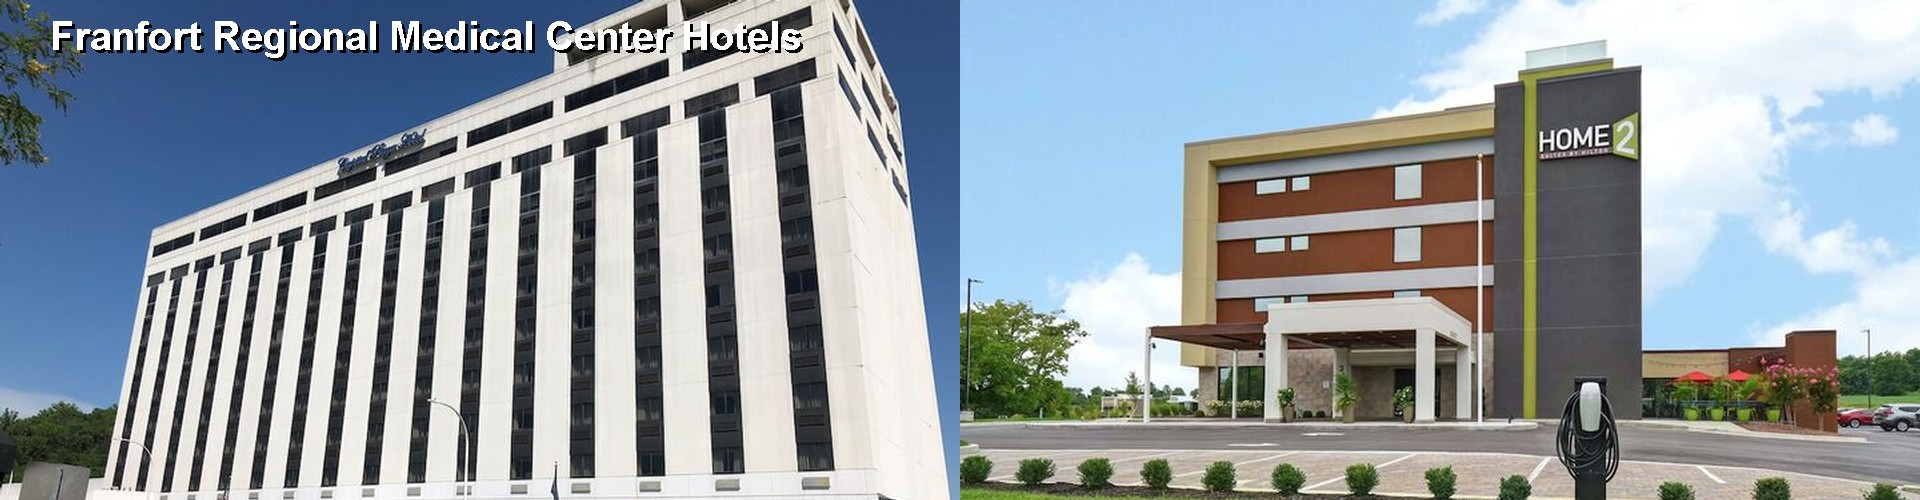 5 Best Hotels near Franfort Regional Medical Center